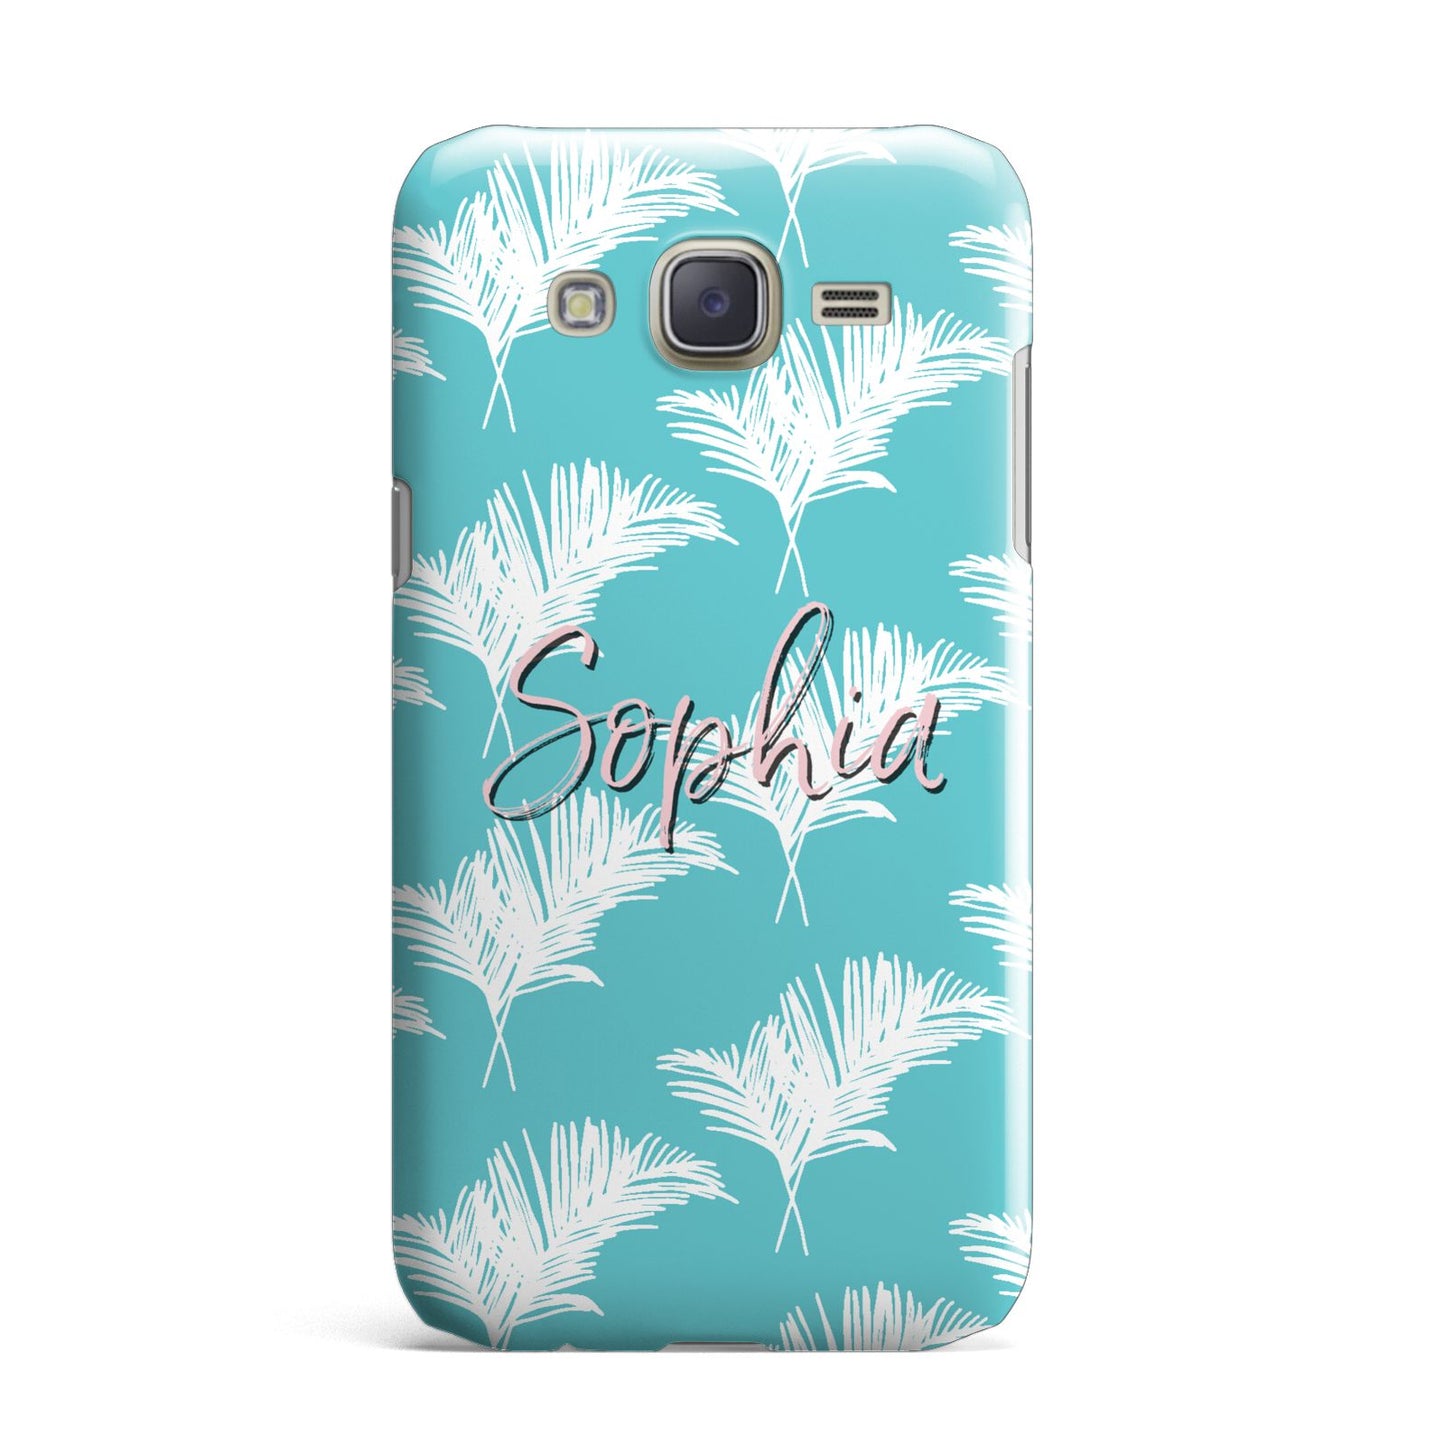 Personalised Blue White Tropical Foliage Samsung Galaxy J7 Case